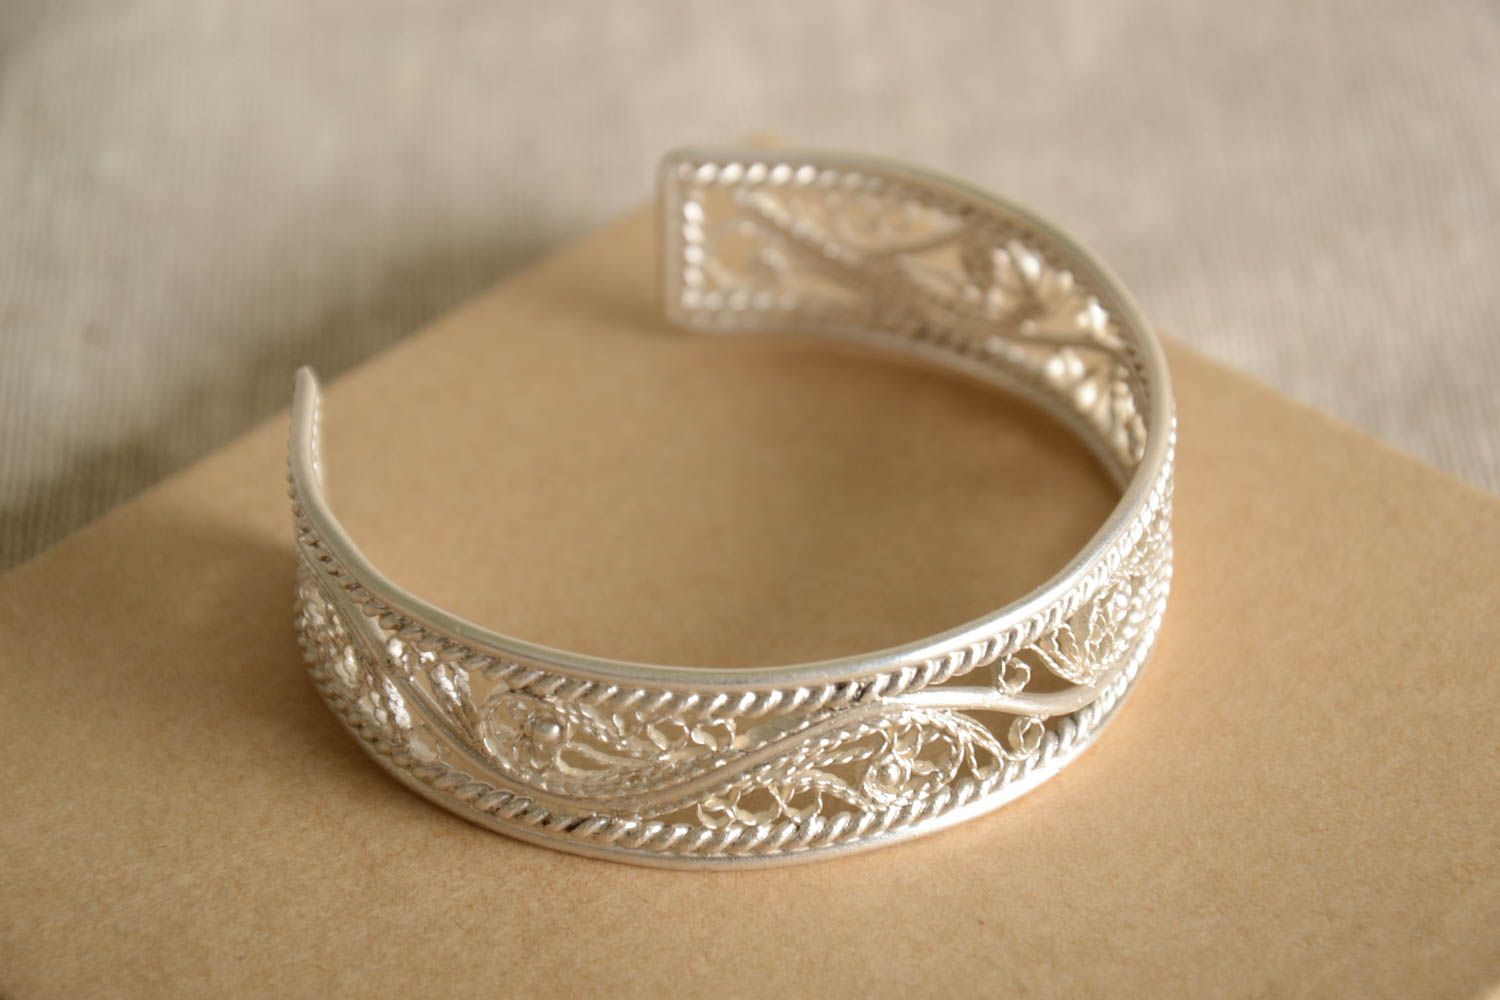 Unusual handmade metal lace bracelet cuff bracelet brass bracelet designs photo 1